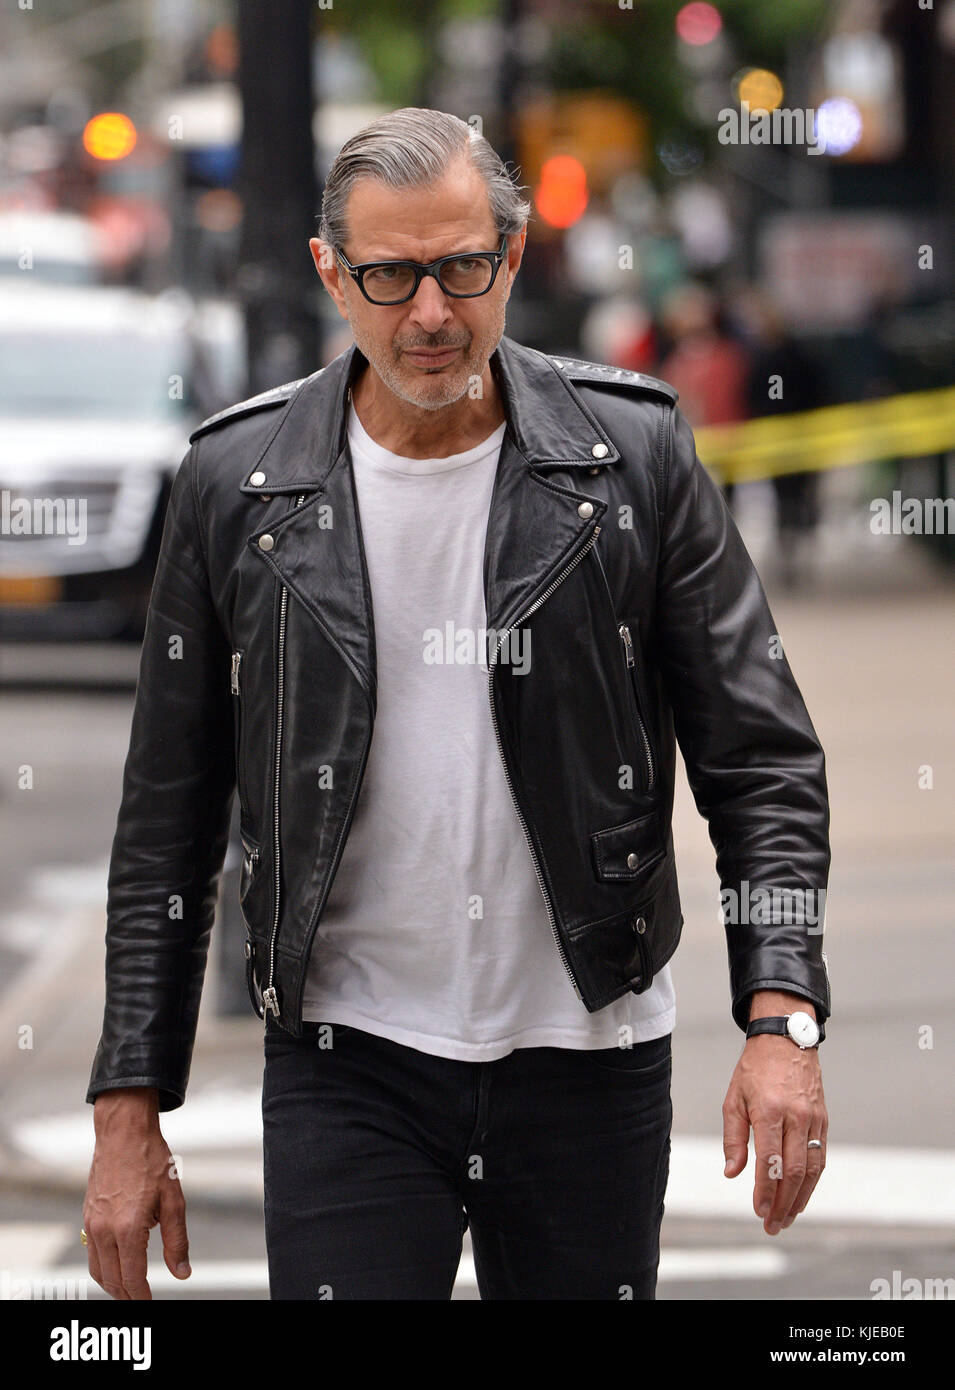 NEW YORK, NY - JUNE 16: Actor Jeff Goldblum walks in Tribeca wearing a ...